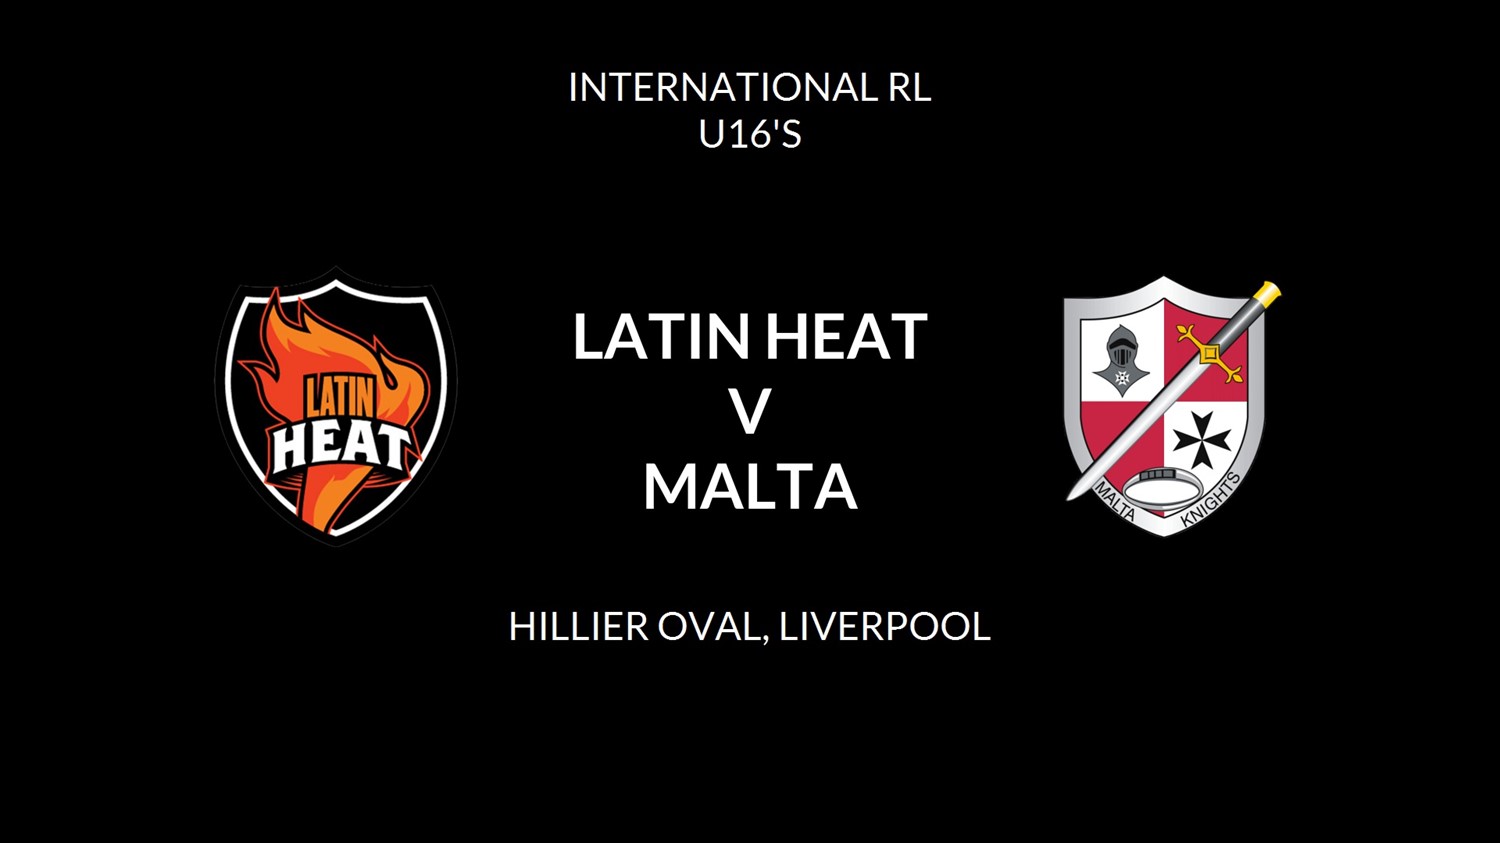 International RL U16's - Latin Heat v Malta Minigame Slate Image